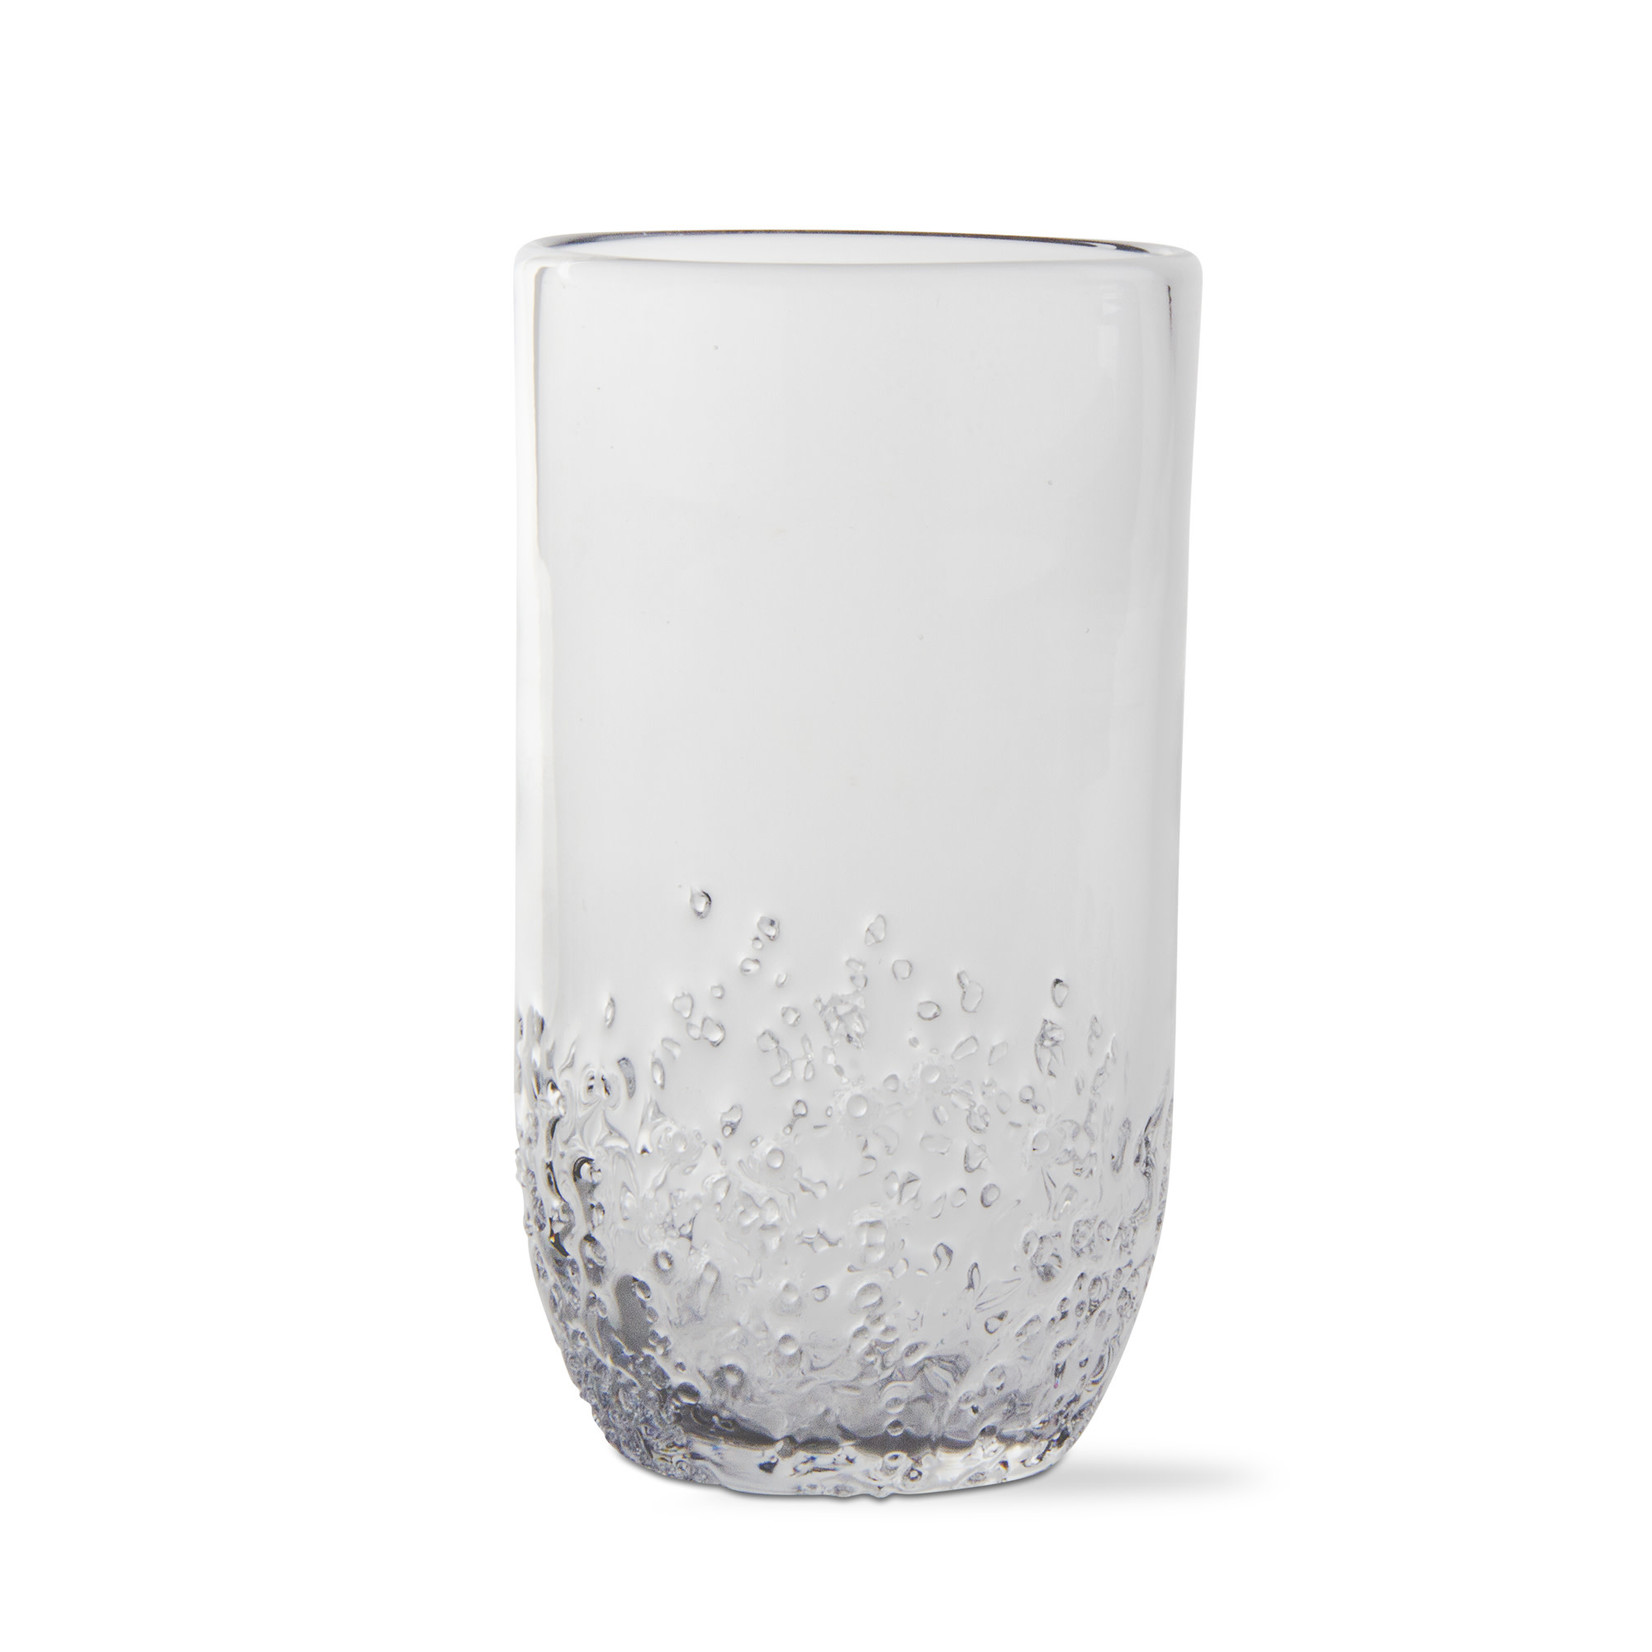 ICE TUMBLER GLASS